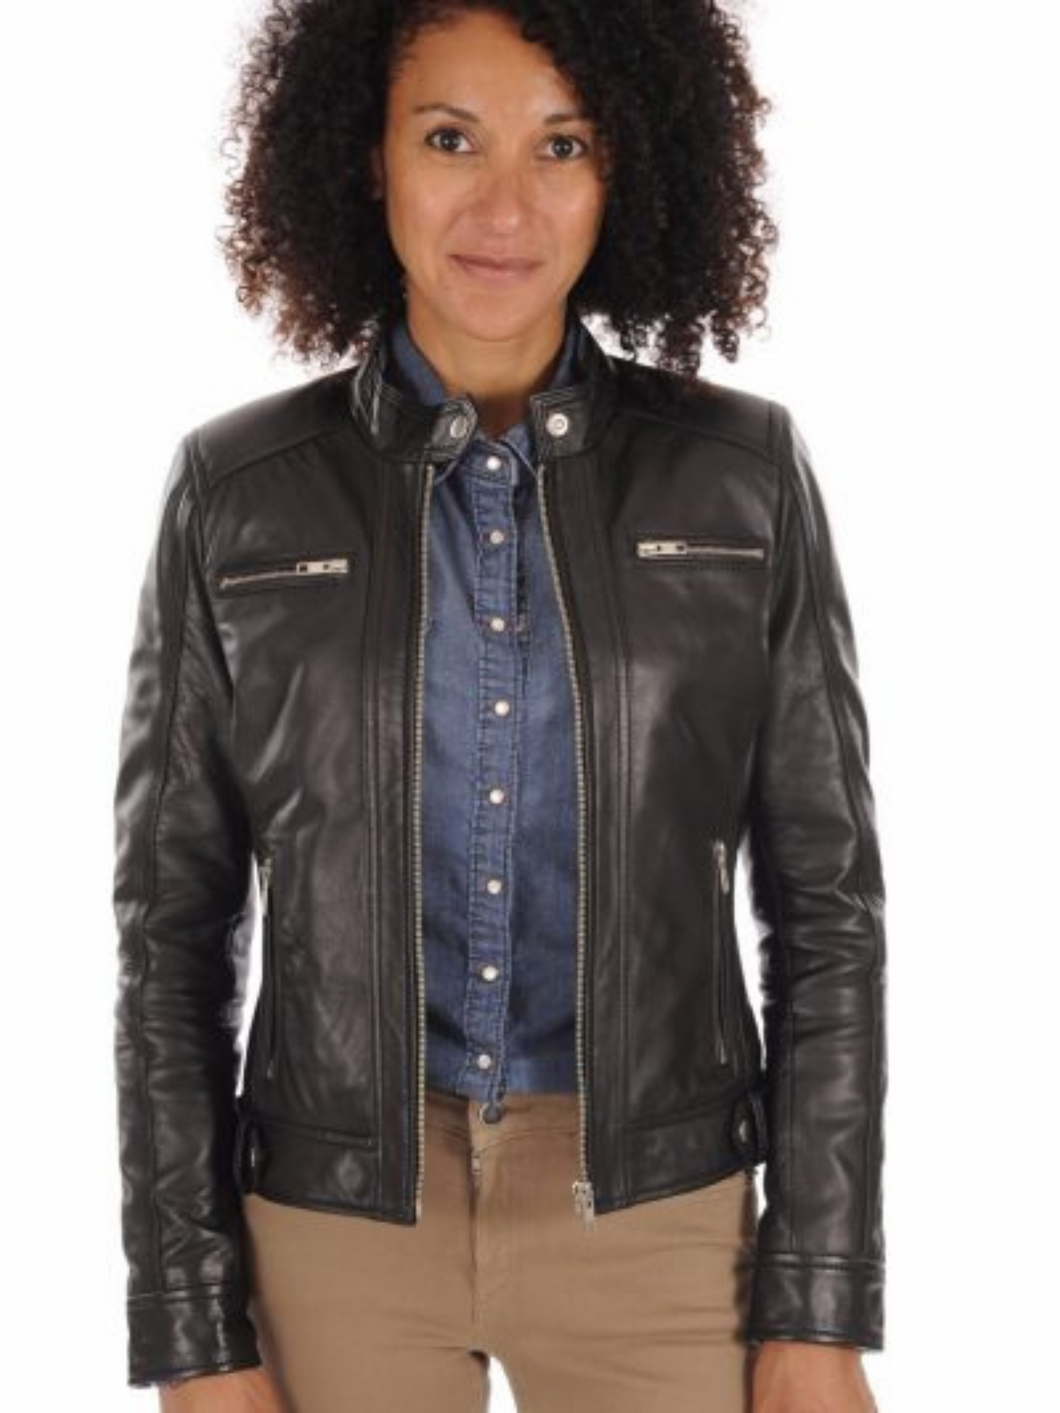 Classic Black Leather Jacket For Biker Women